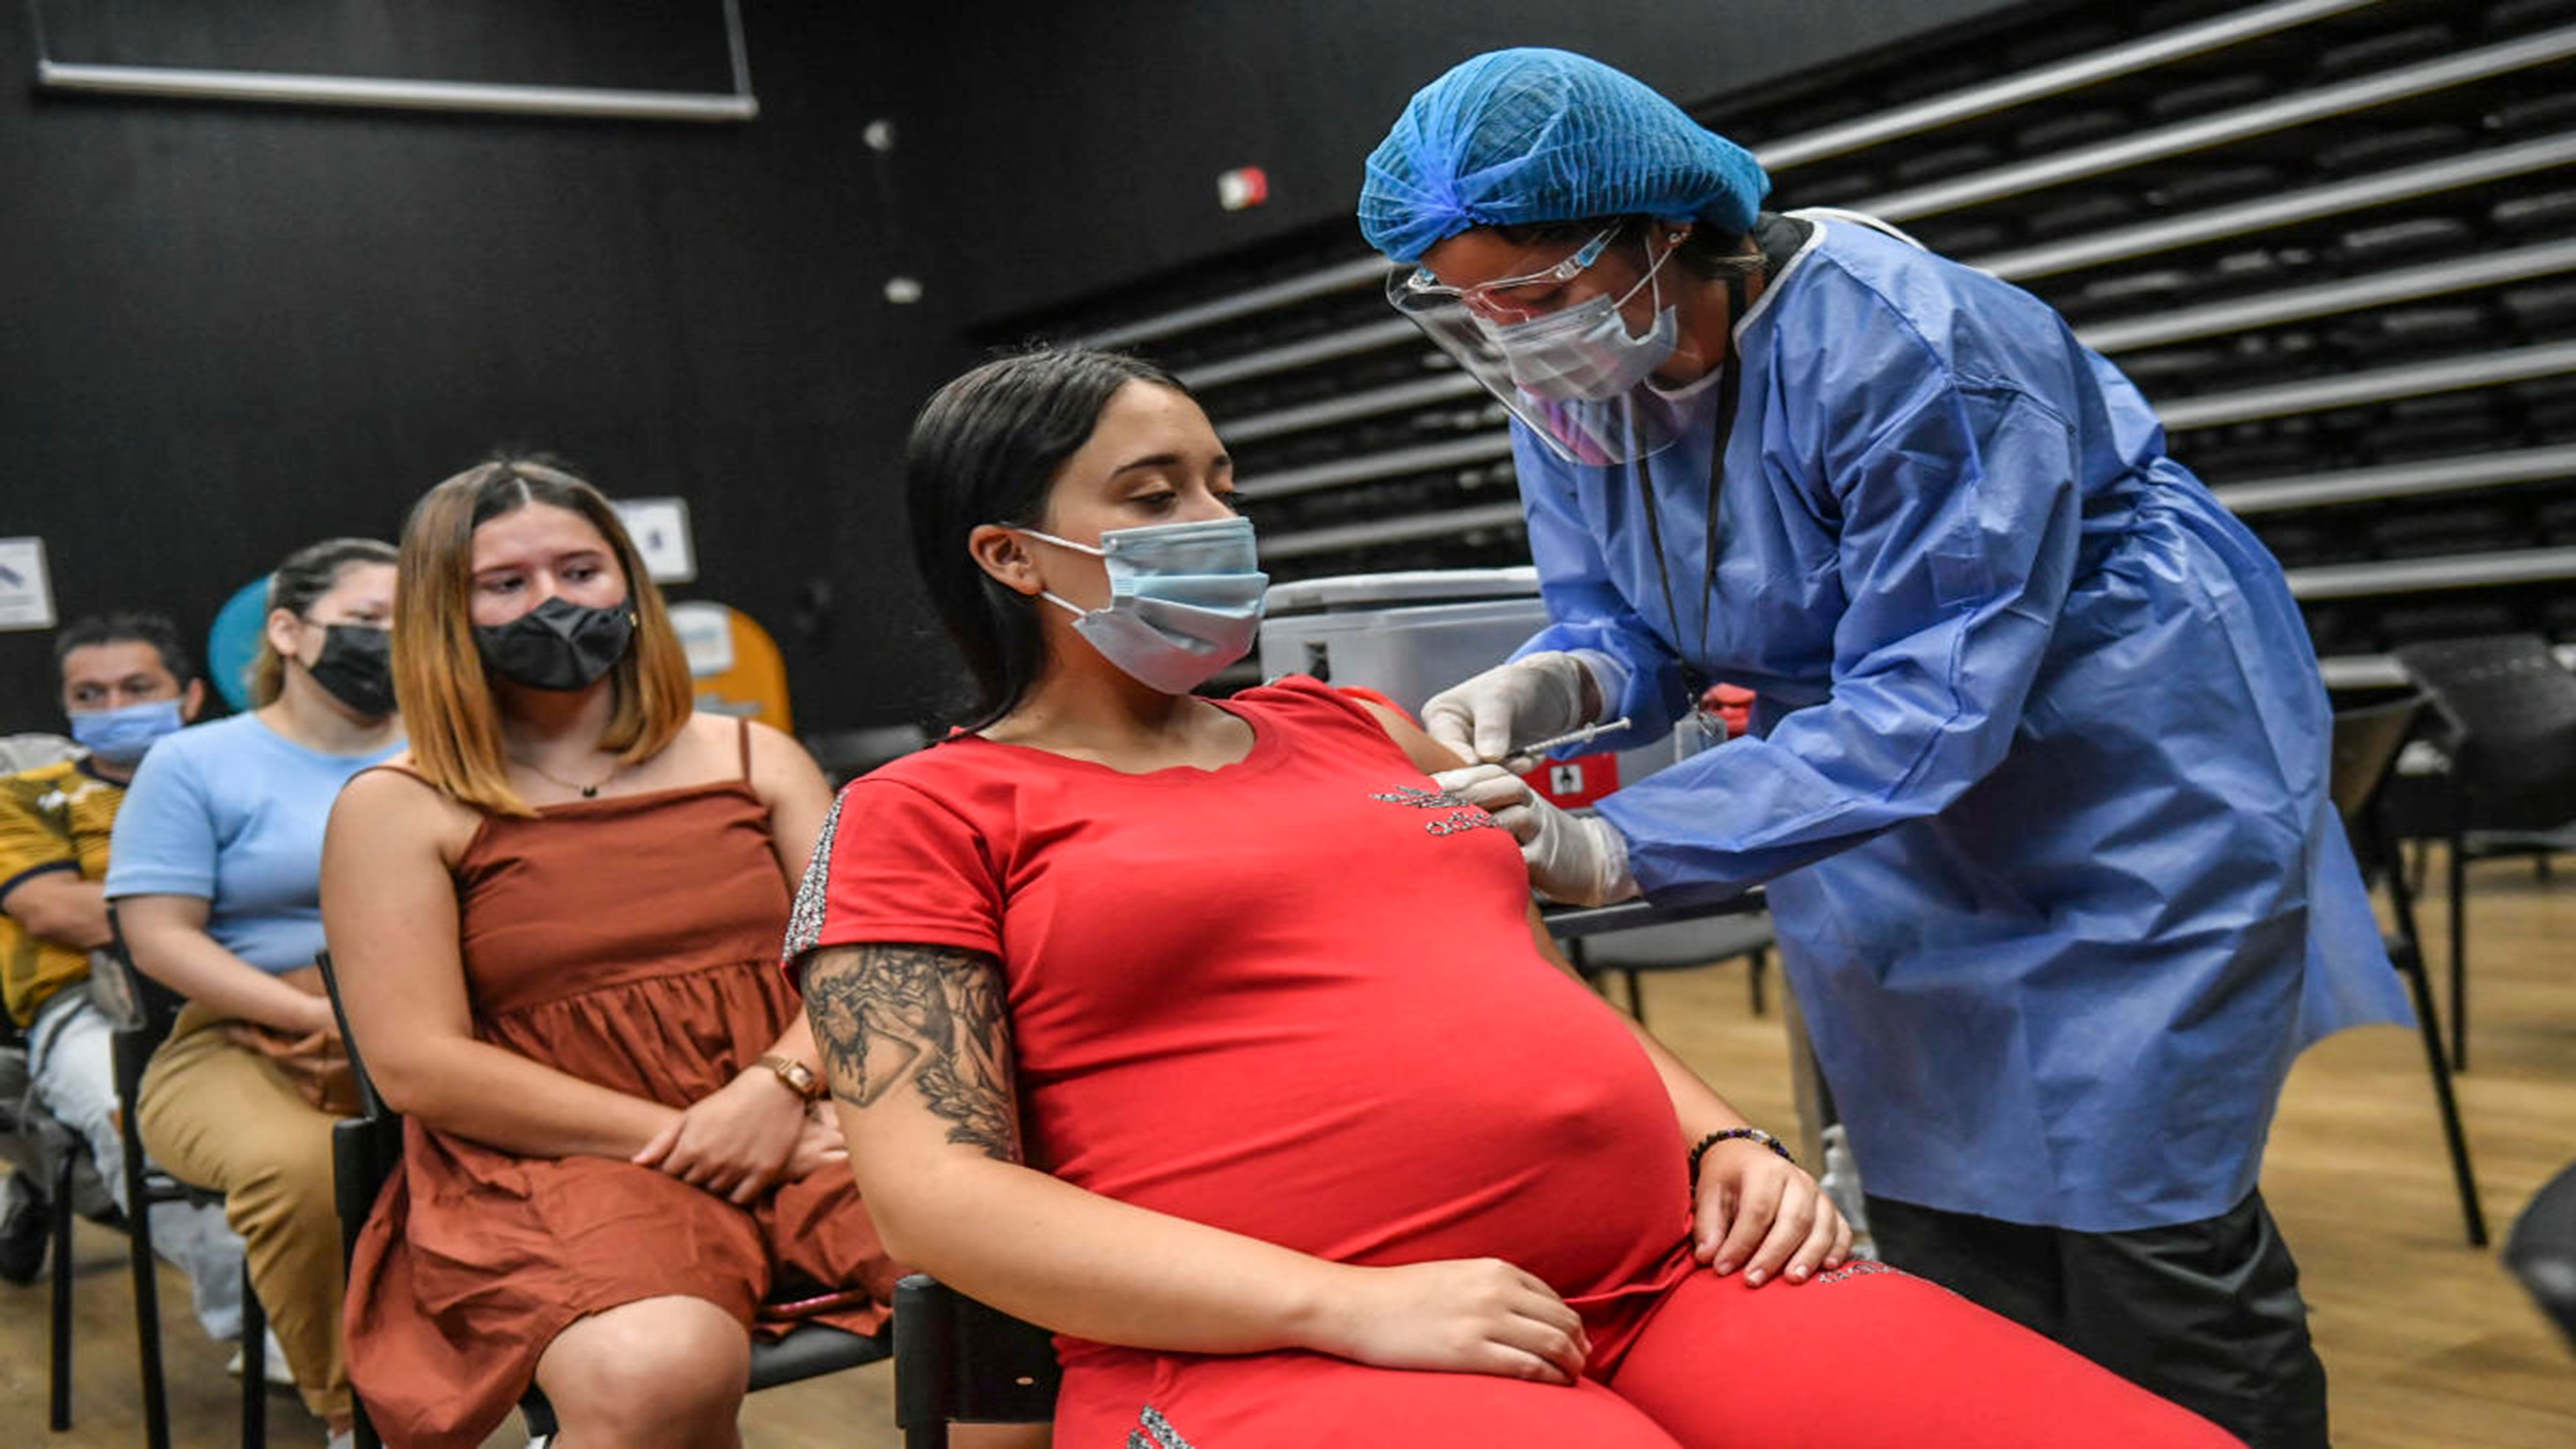 Covid significantly raises stillbirth risks photo Yahoo News